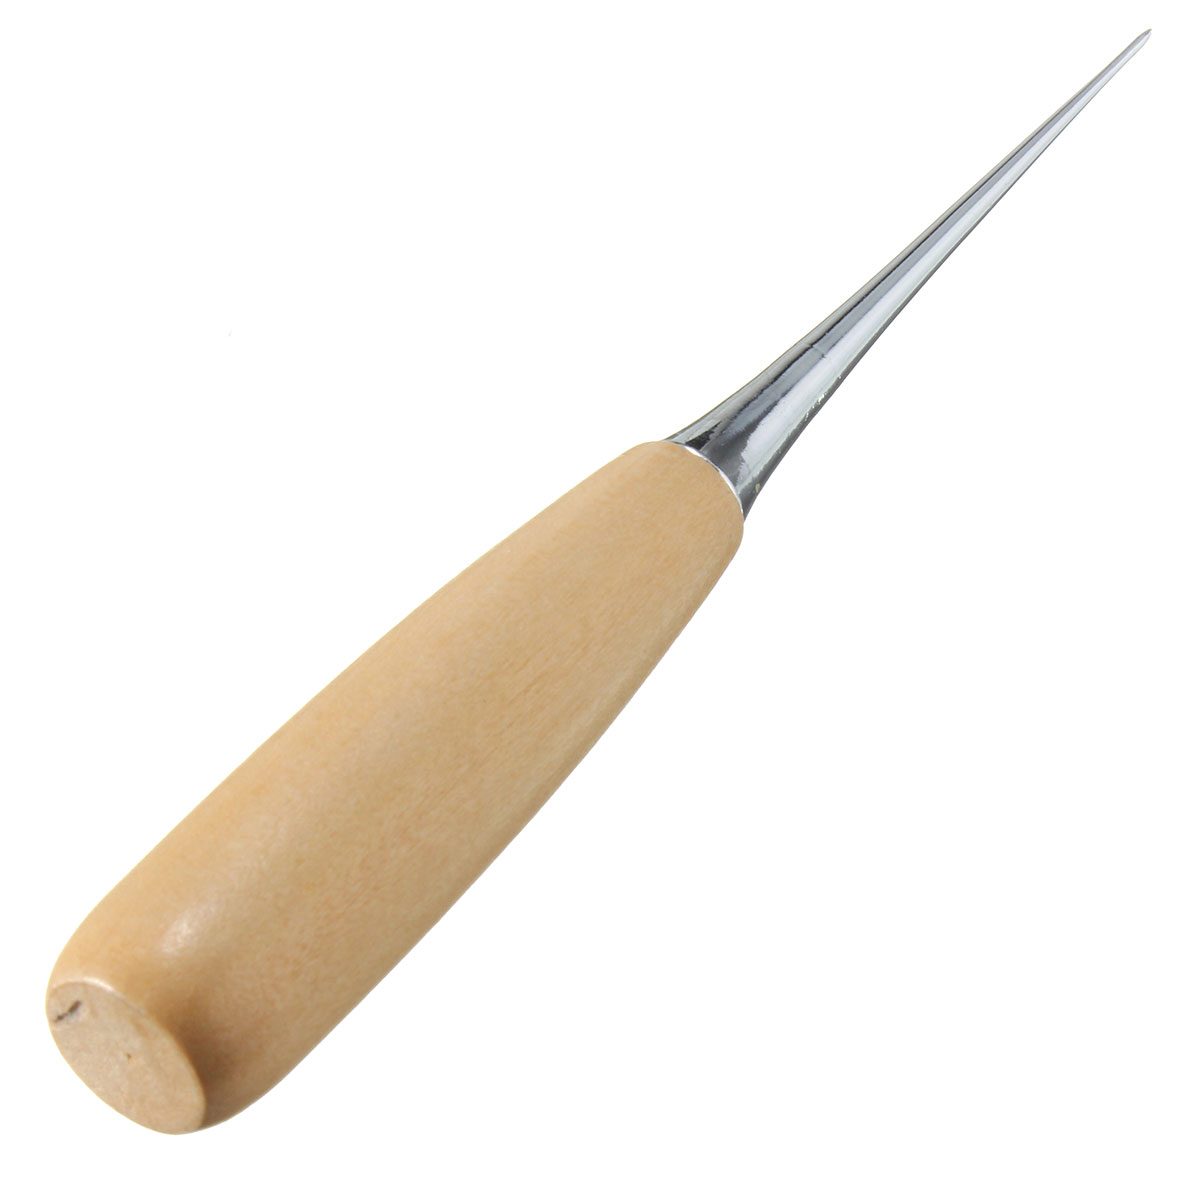 Leather-Craft-Hand-Awl-Punch-Wood-Stick-Tool-Polishing-DIY-Tool-1090360-5